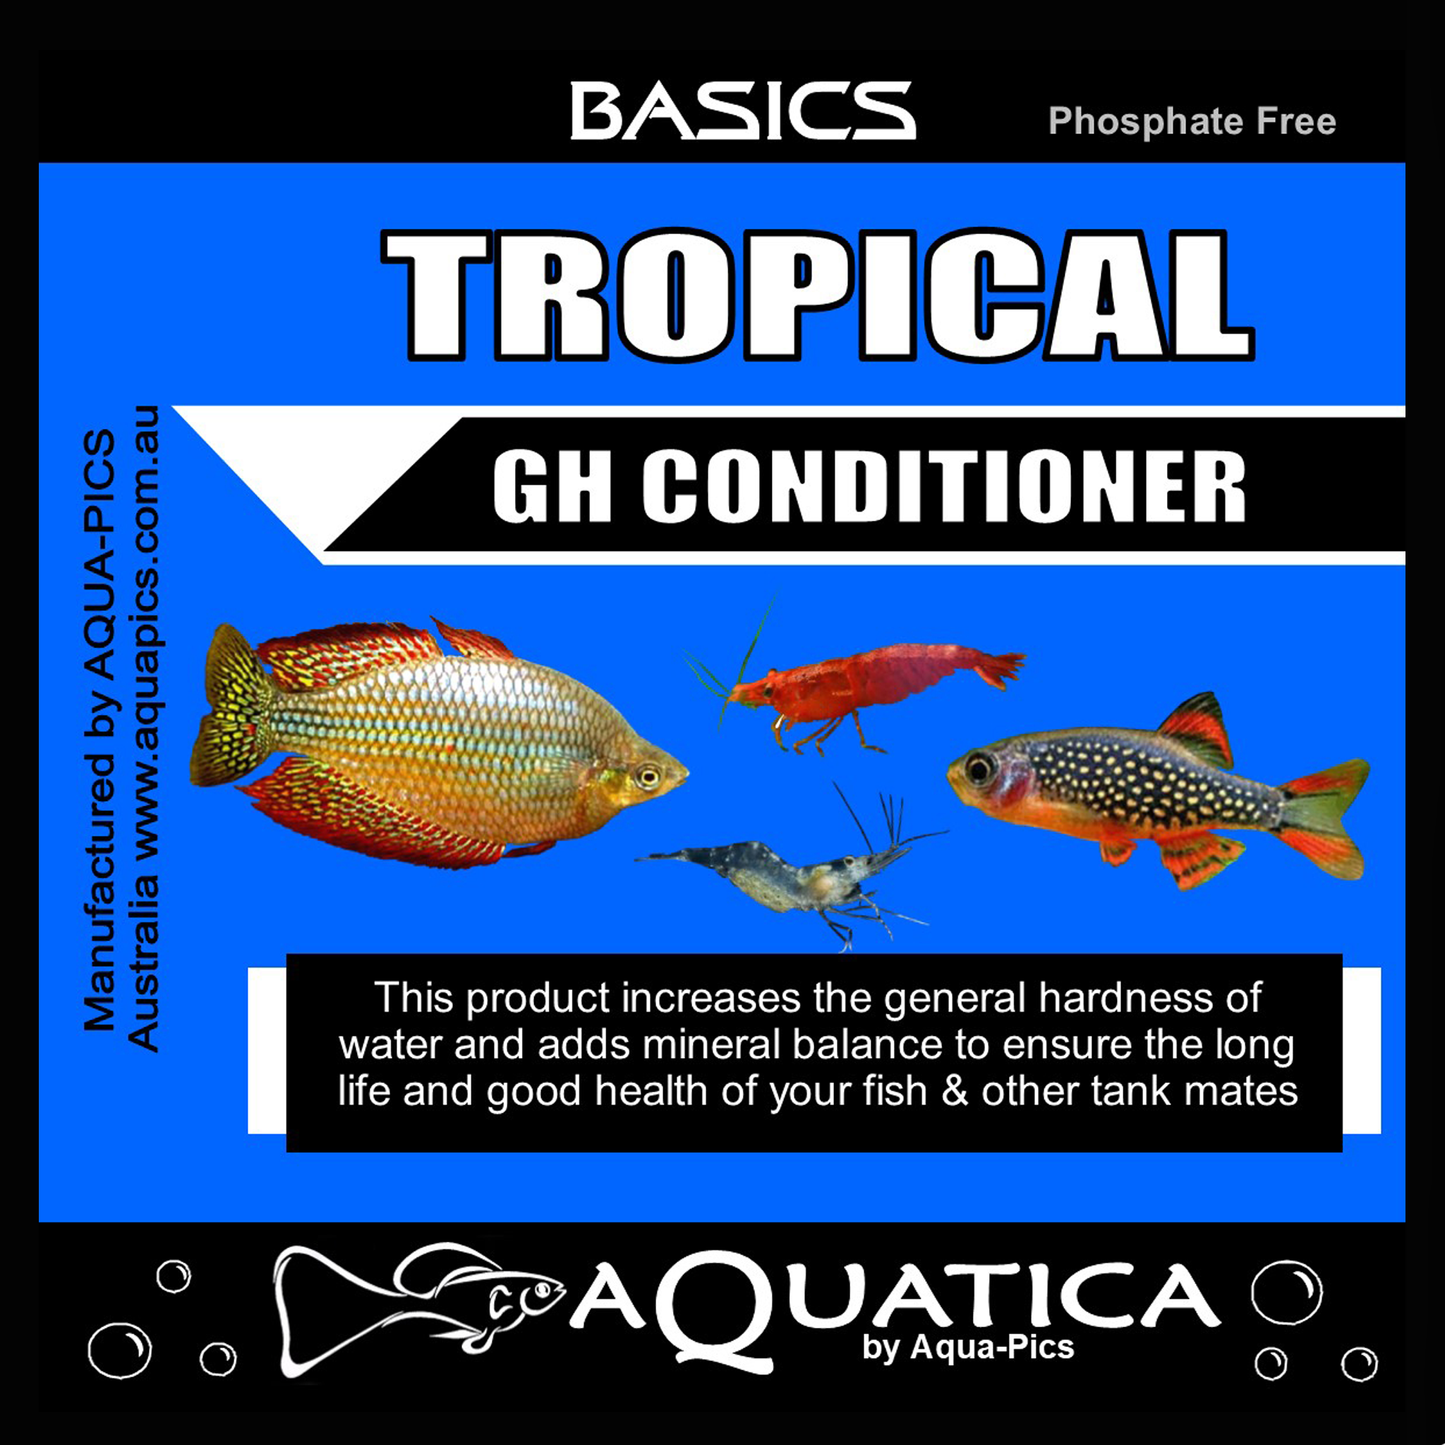 Aquatica Basics Tropical GH Conditioner 1kg bag